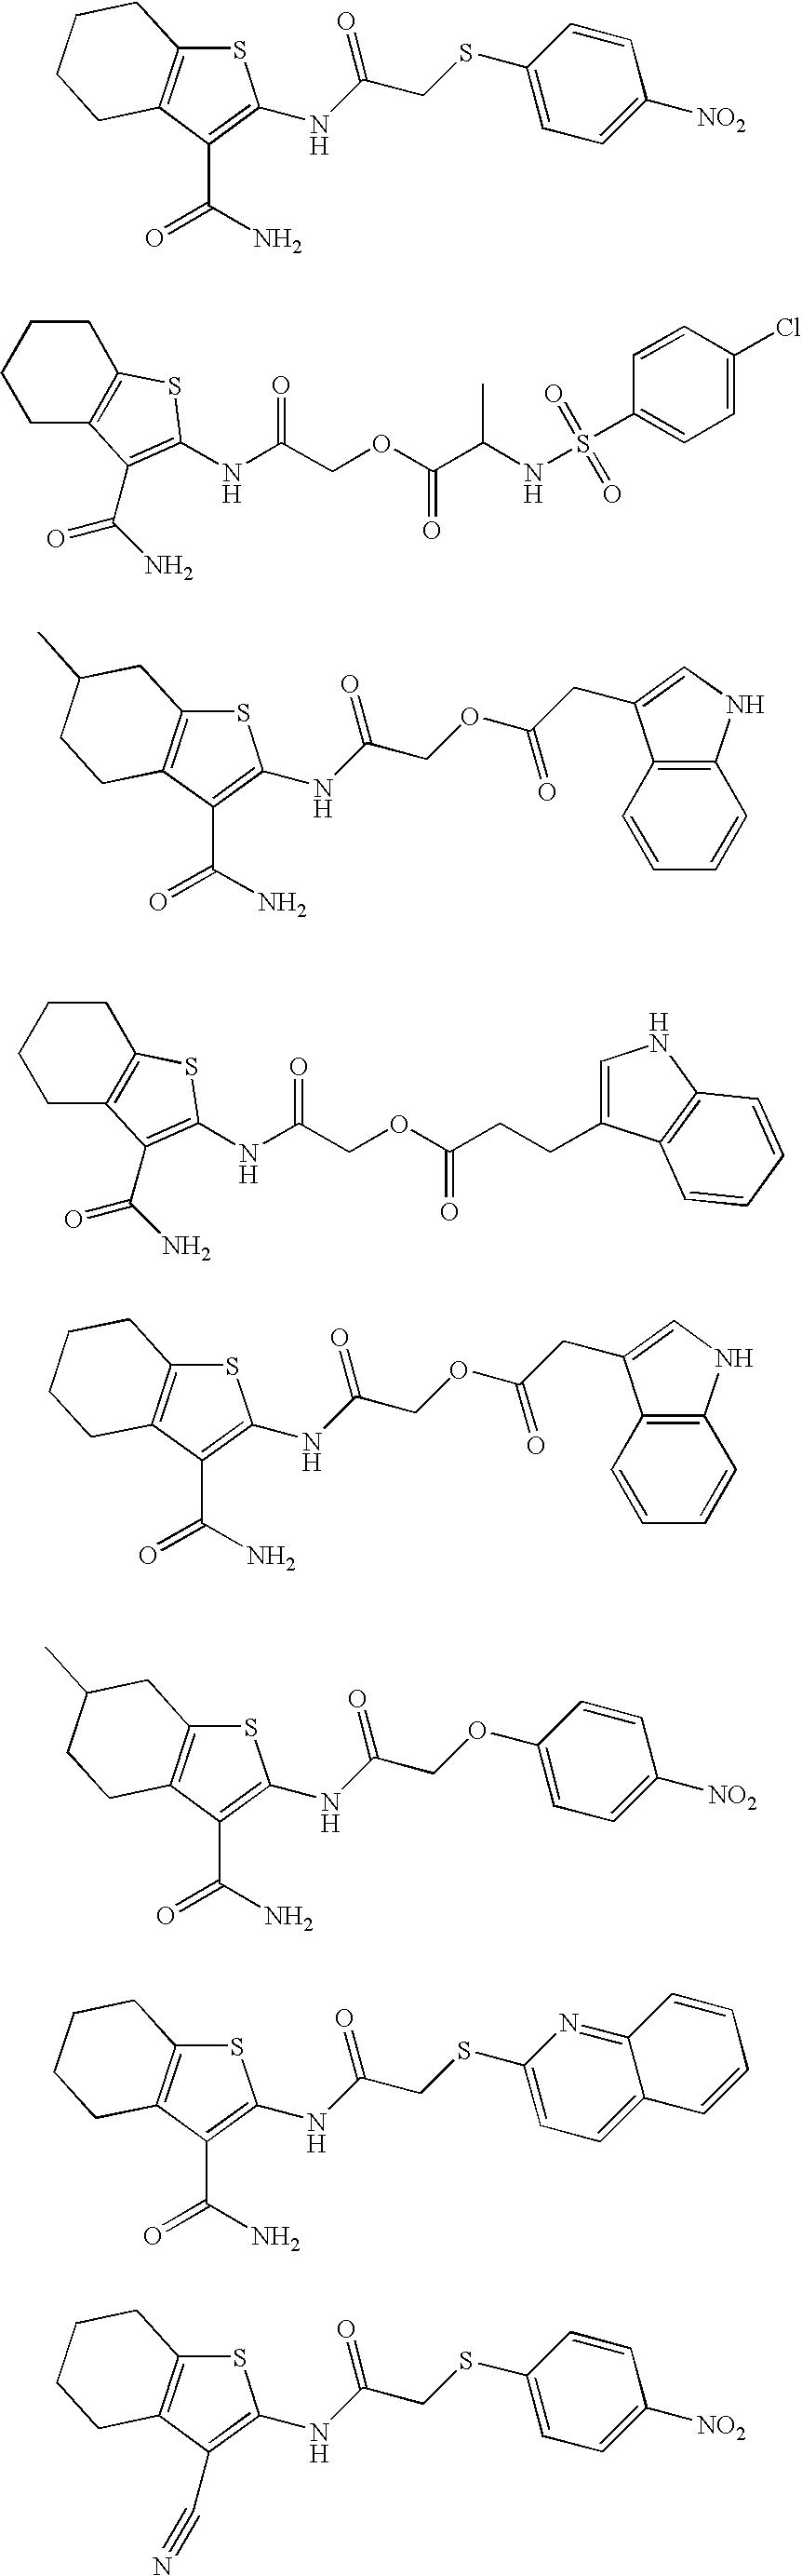 Cyclopentathiophene/cyclohexathiophene DNA methyltransferase inhibitors